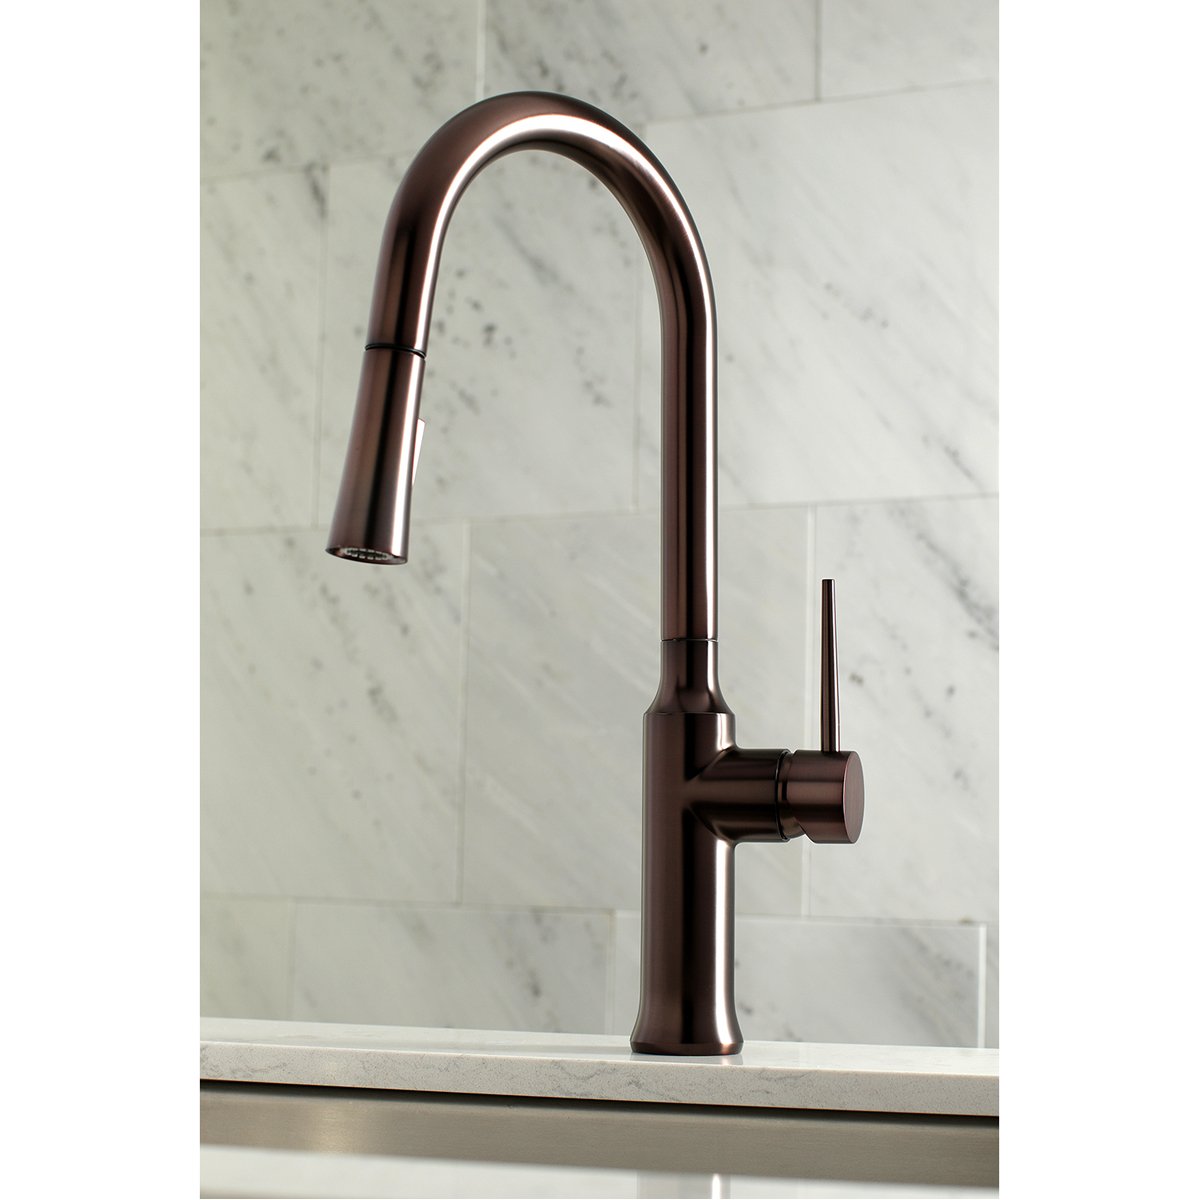 Kingston Brass New York Gourmetier Deck Mount Single-Handle Pull-Down Kitchen Faucet